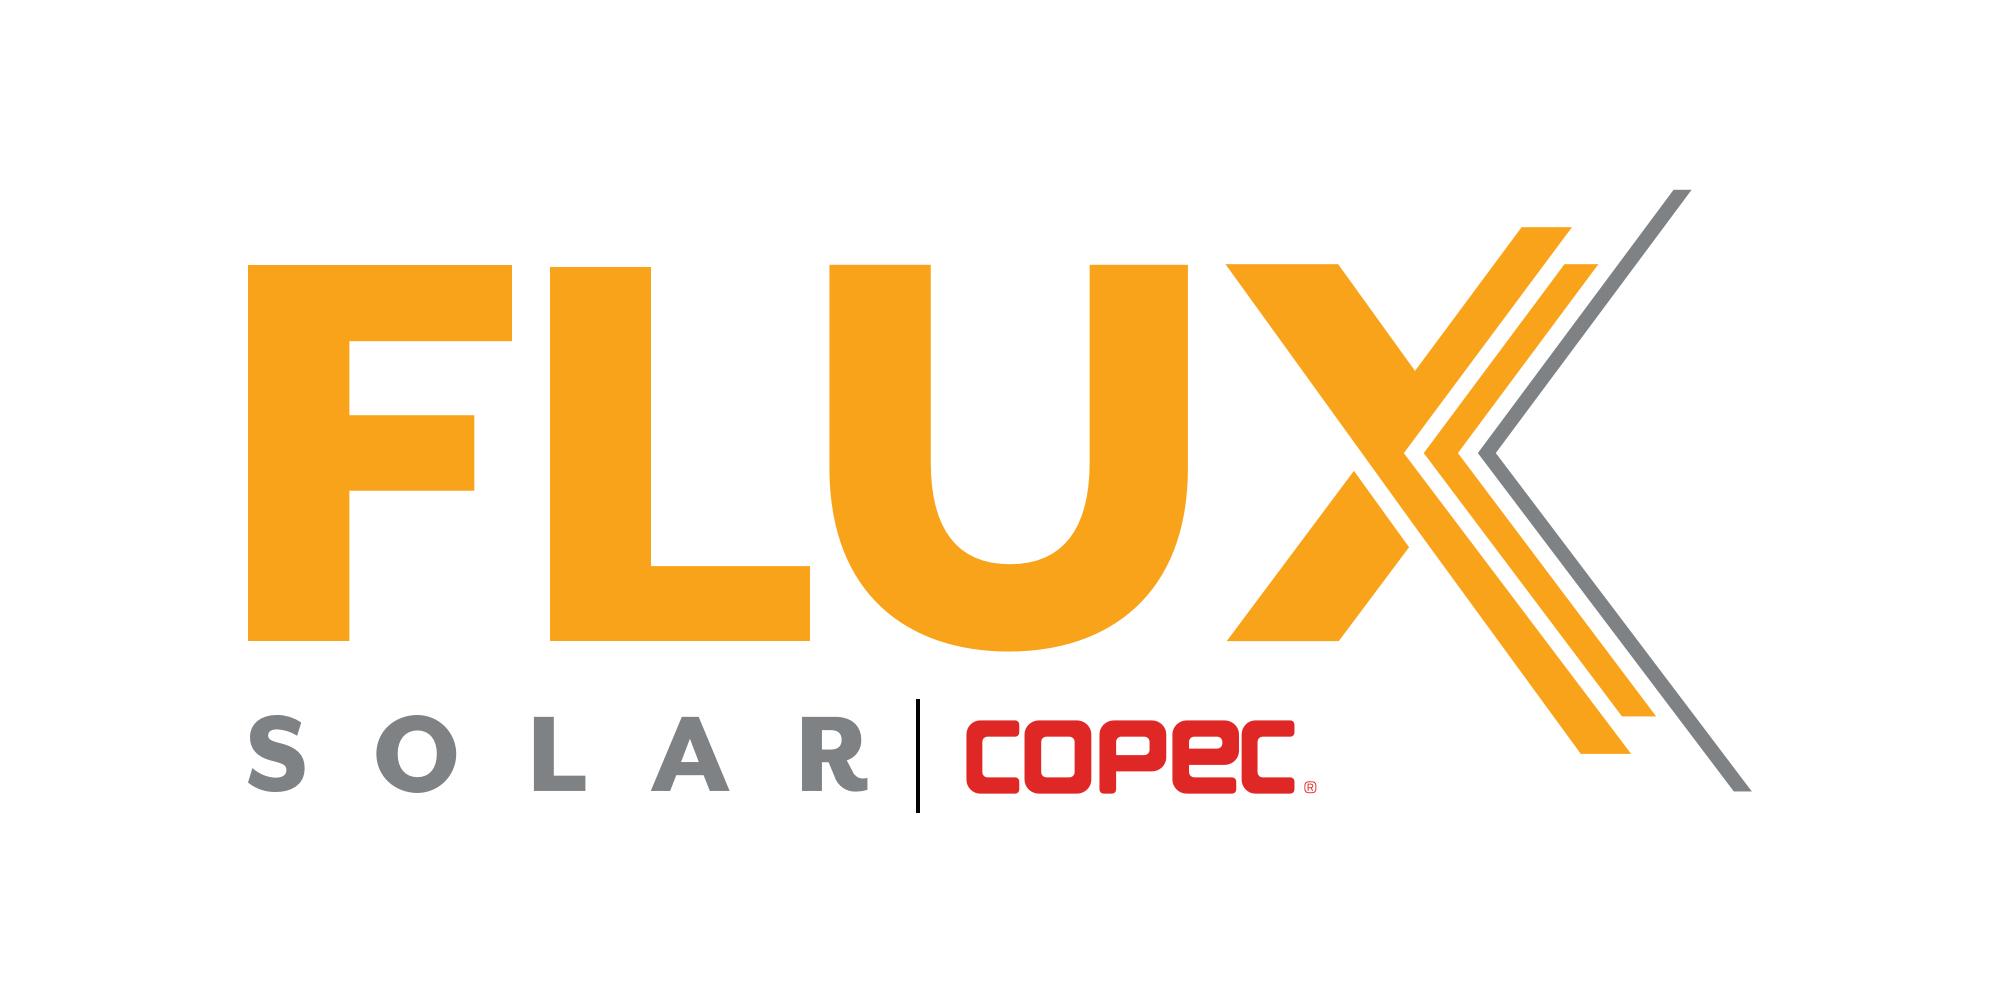 Logo Flux Solar